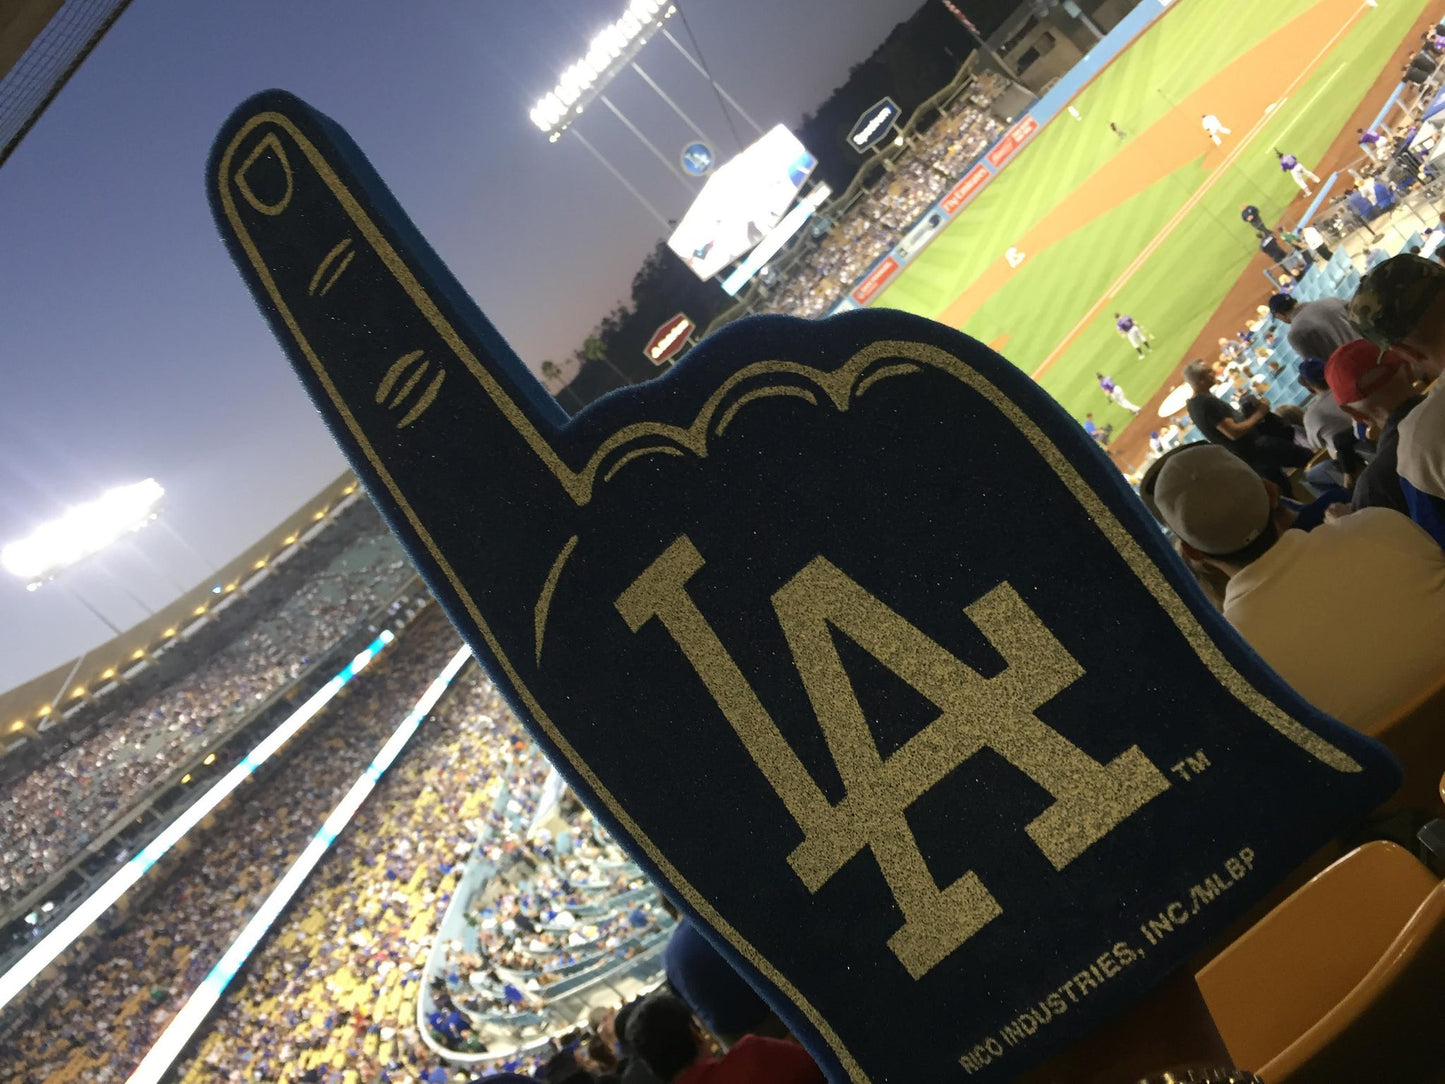 LA Dodgers #1 Fan ドジャース フォームフィンガー ウェーブハンド 人差し指 応援グッズ オフィシャル  Rico Industries MLB